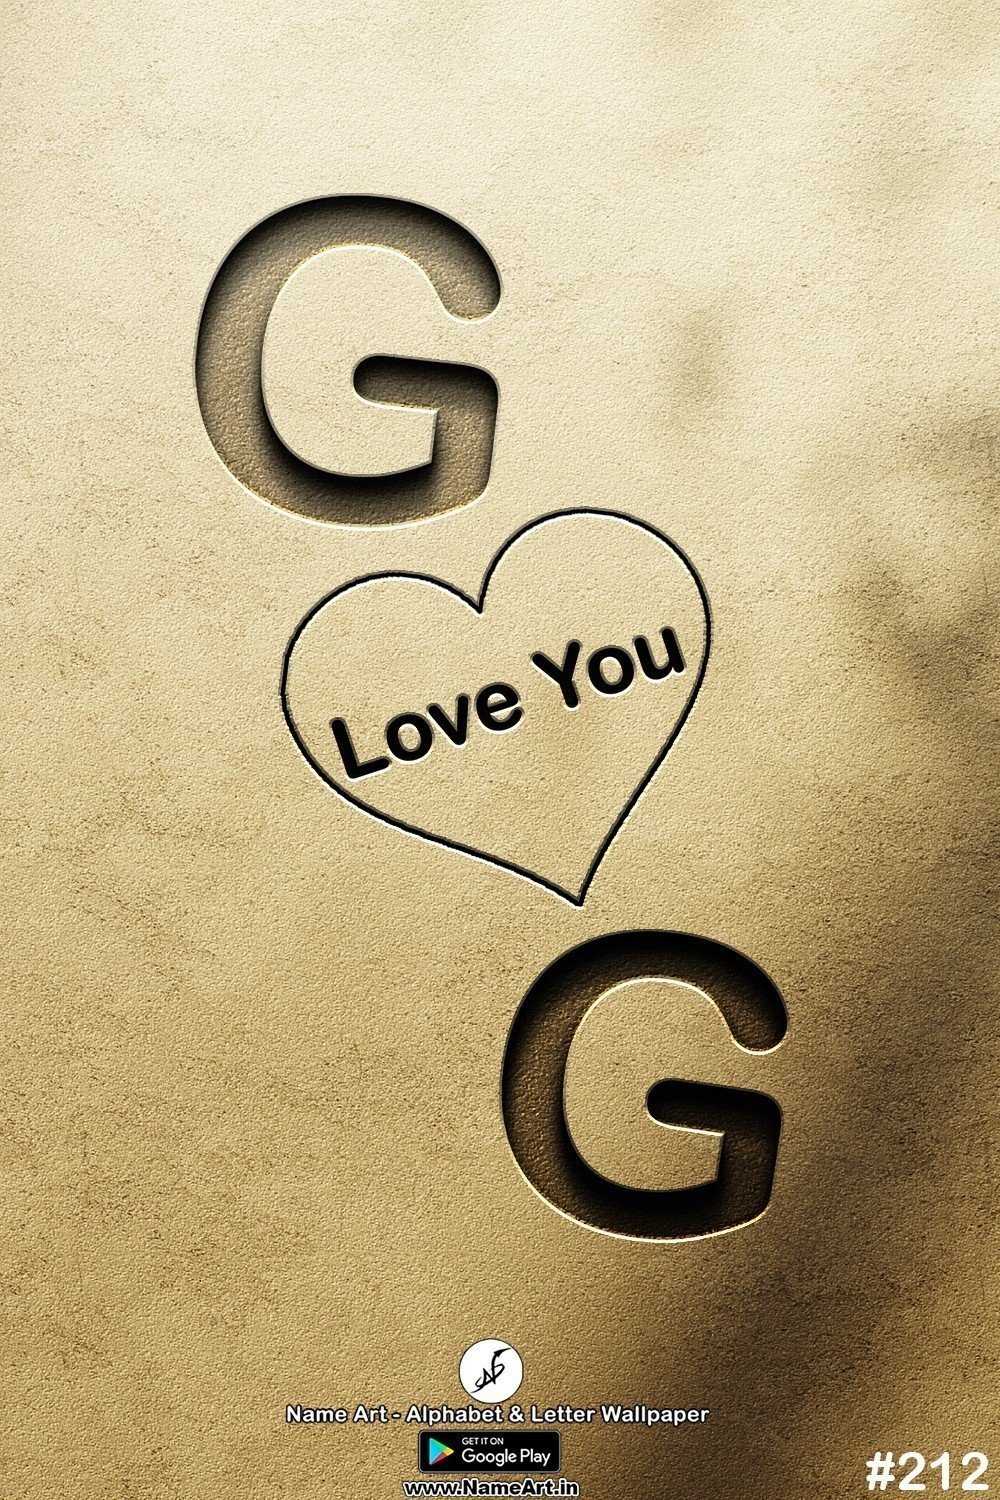 GG | Whatsapp Status DP GG | GG Love Status Cute Couple Whatsapp Status DP !! | New Whatsapp Status DP GG Images |